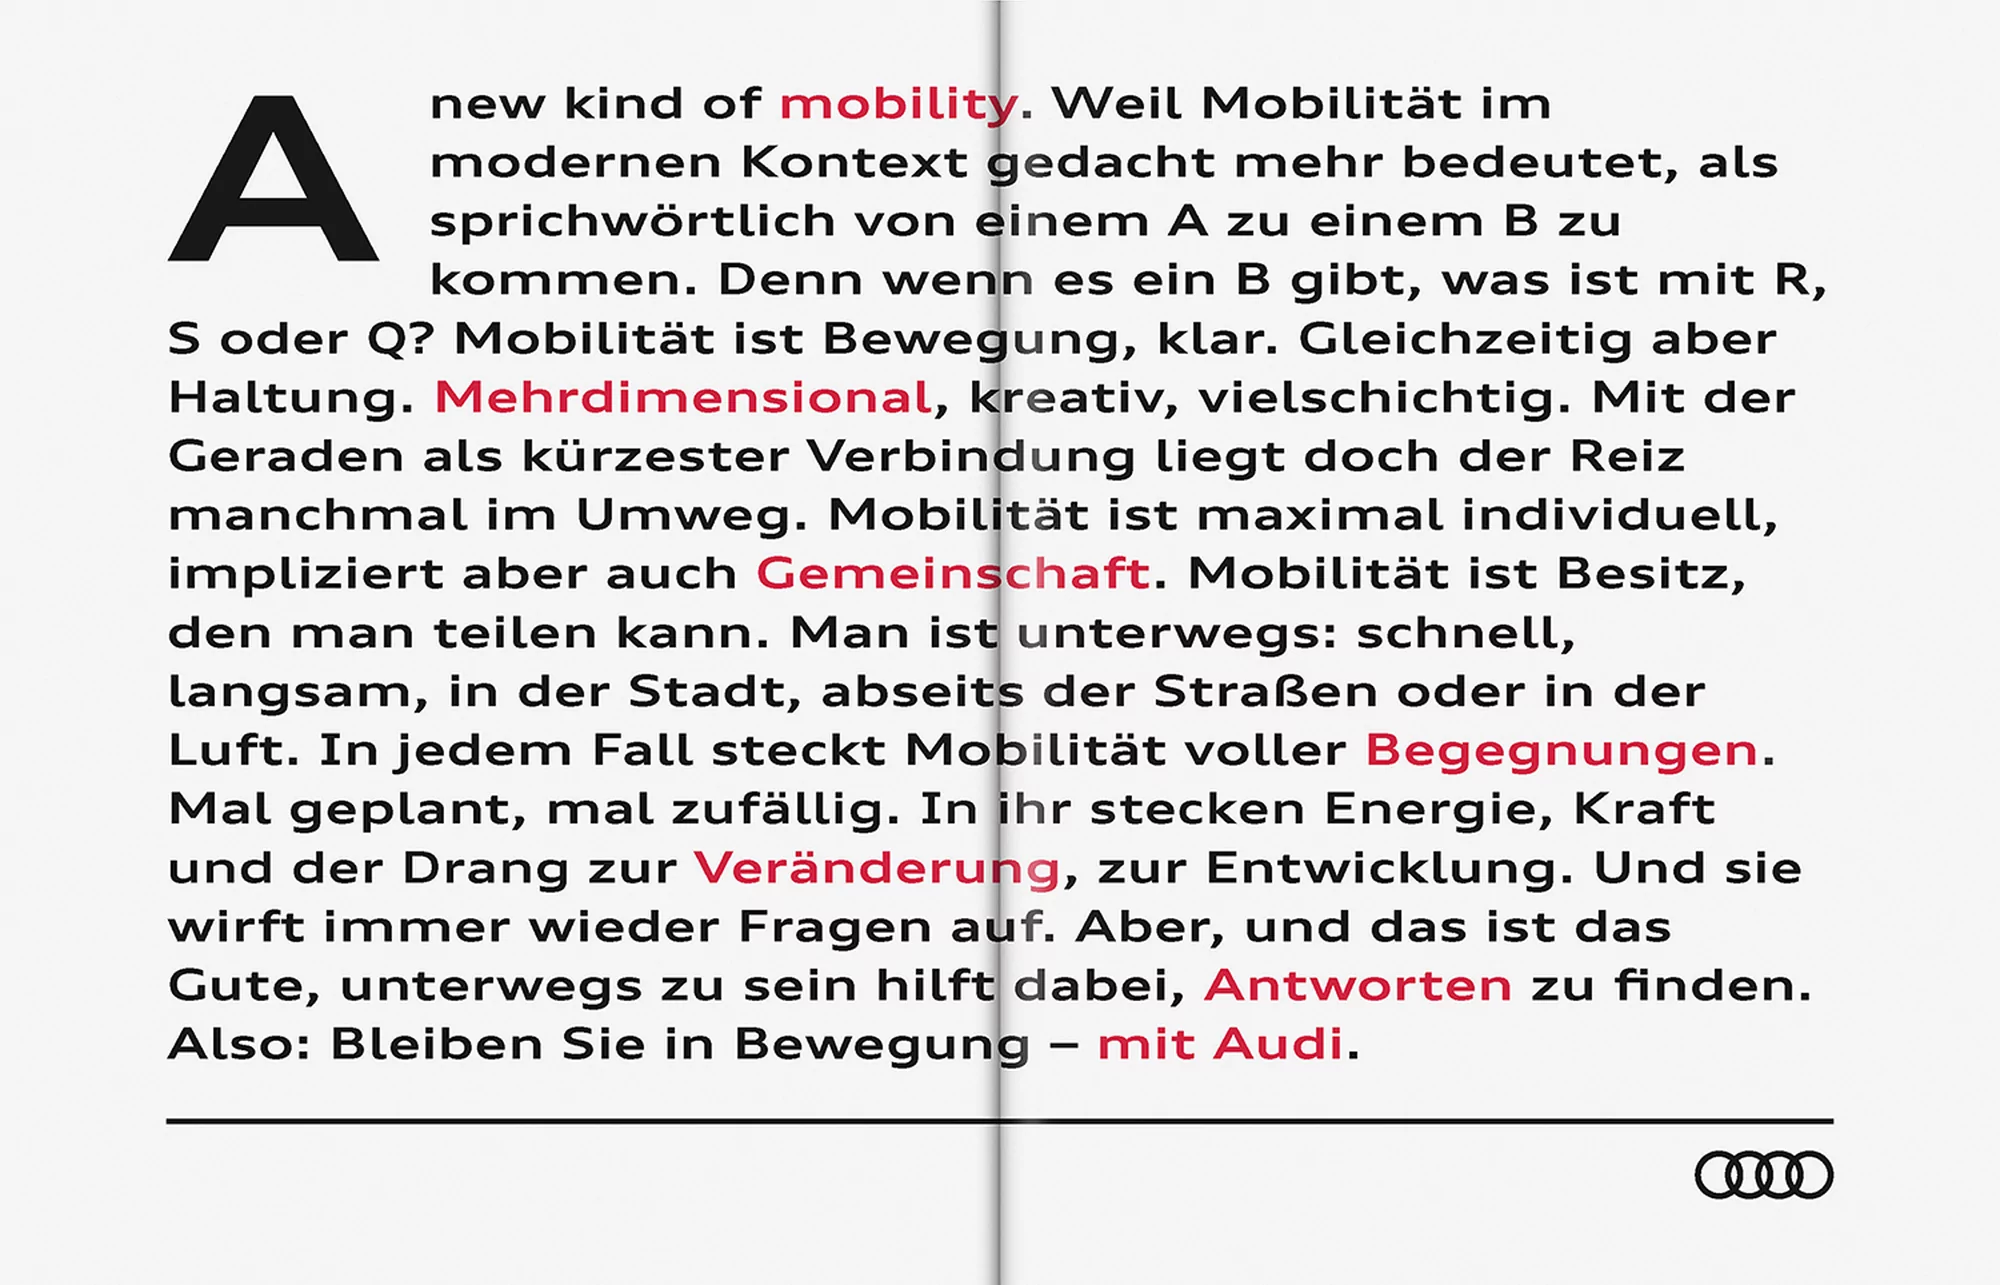 Audi Magazine No.1 by Bureau Borsche